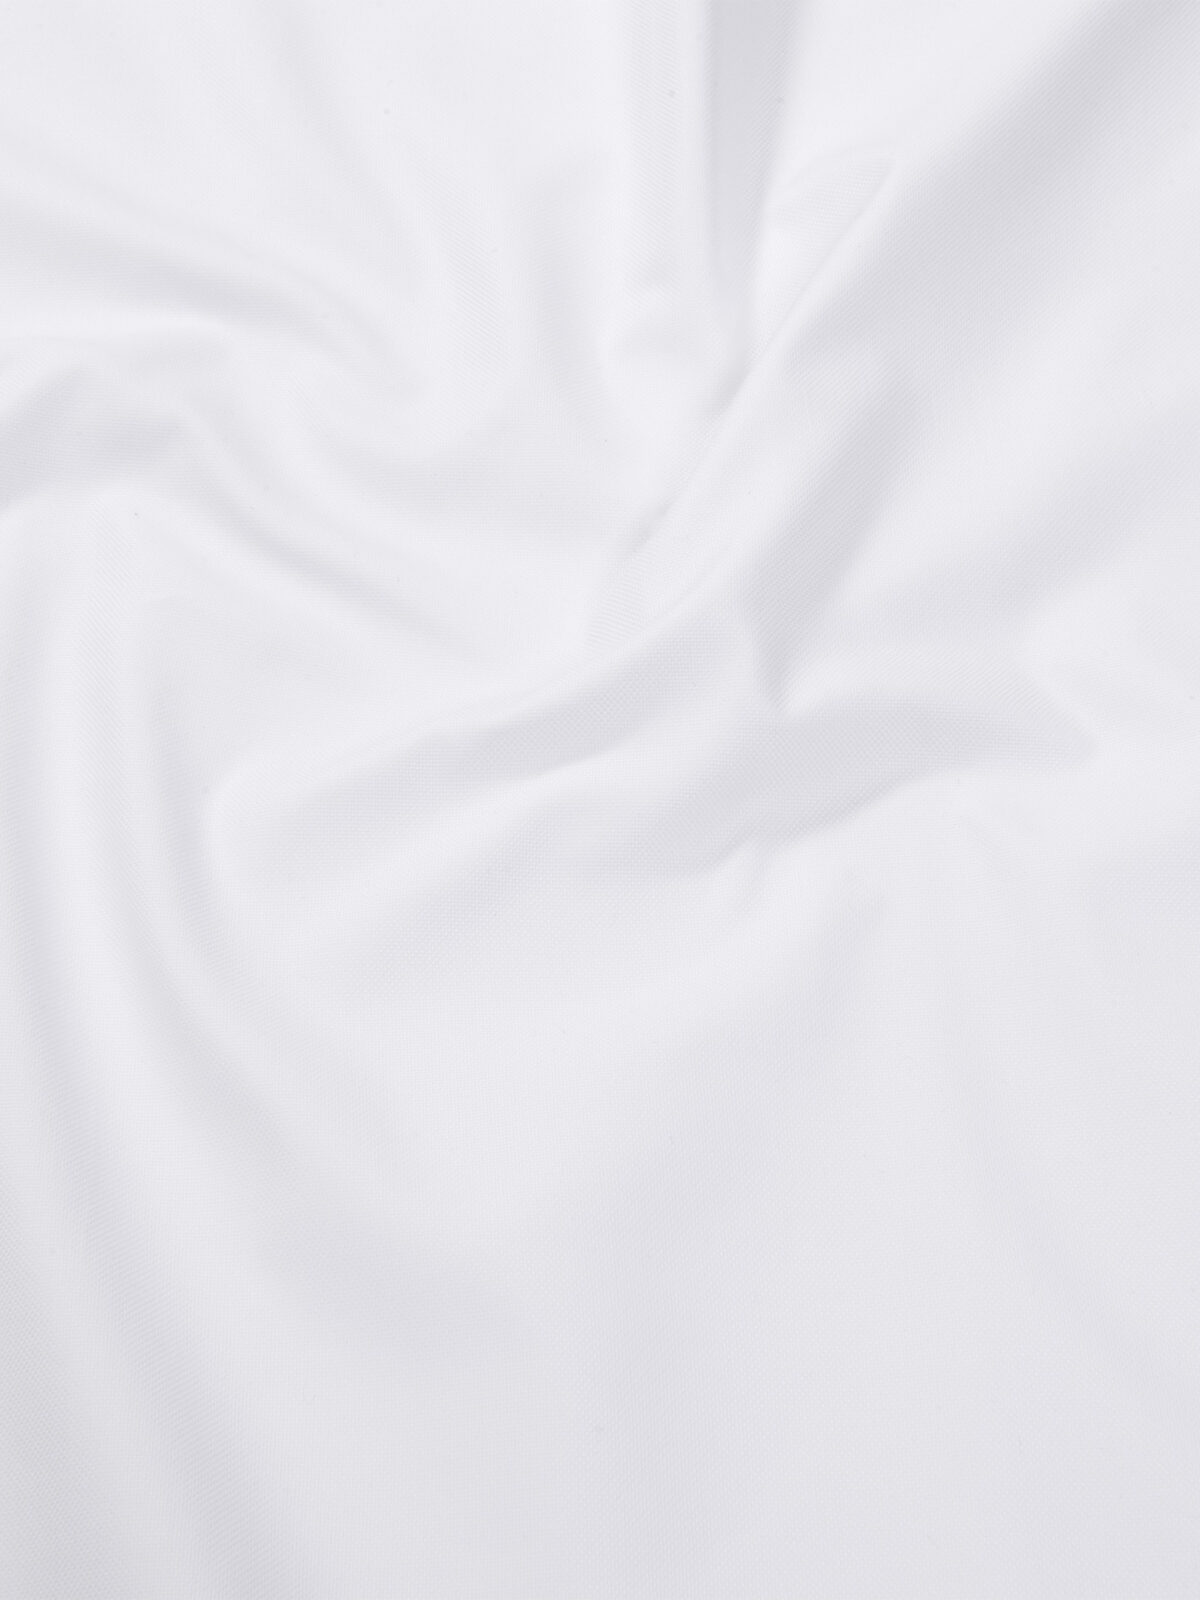 DJA Sea Island White Royal Oxford Shirts by Proper Cloth